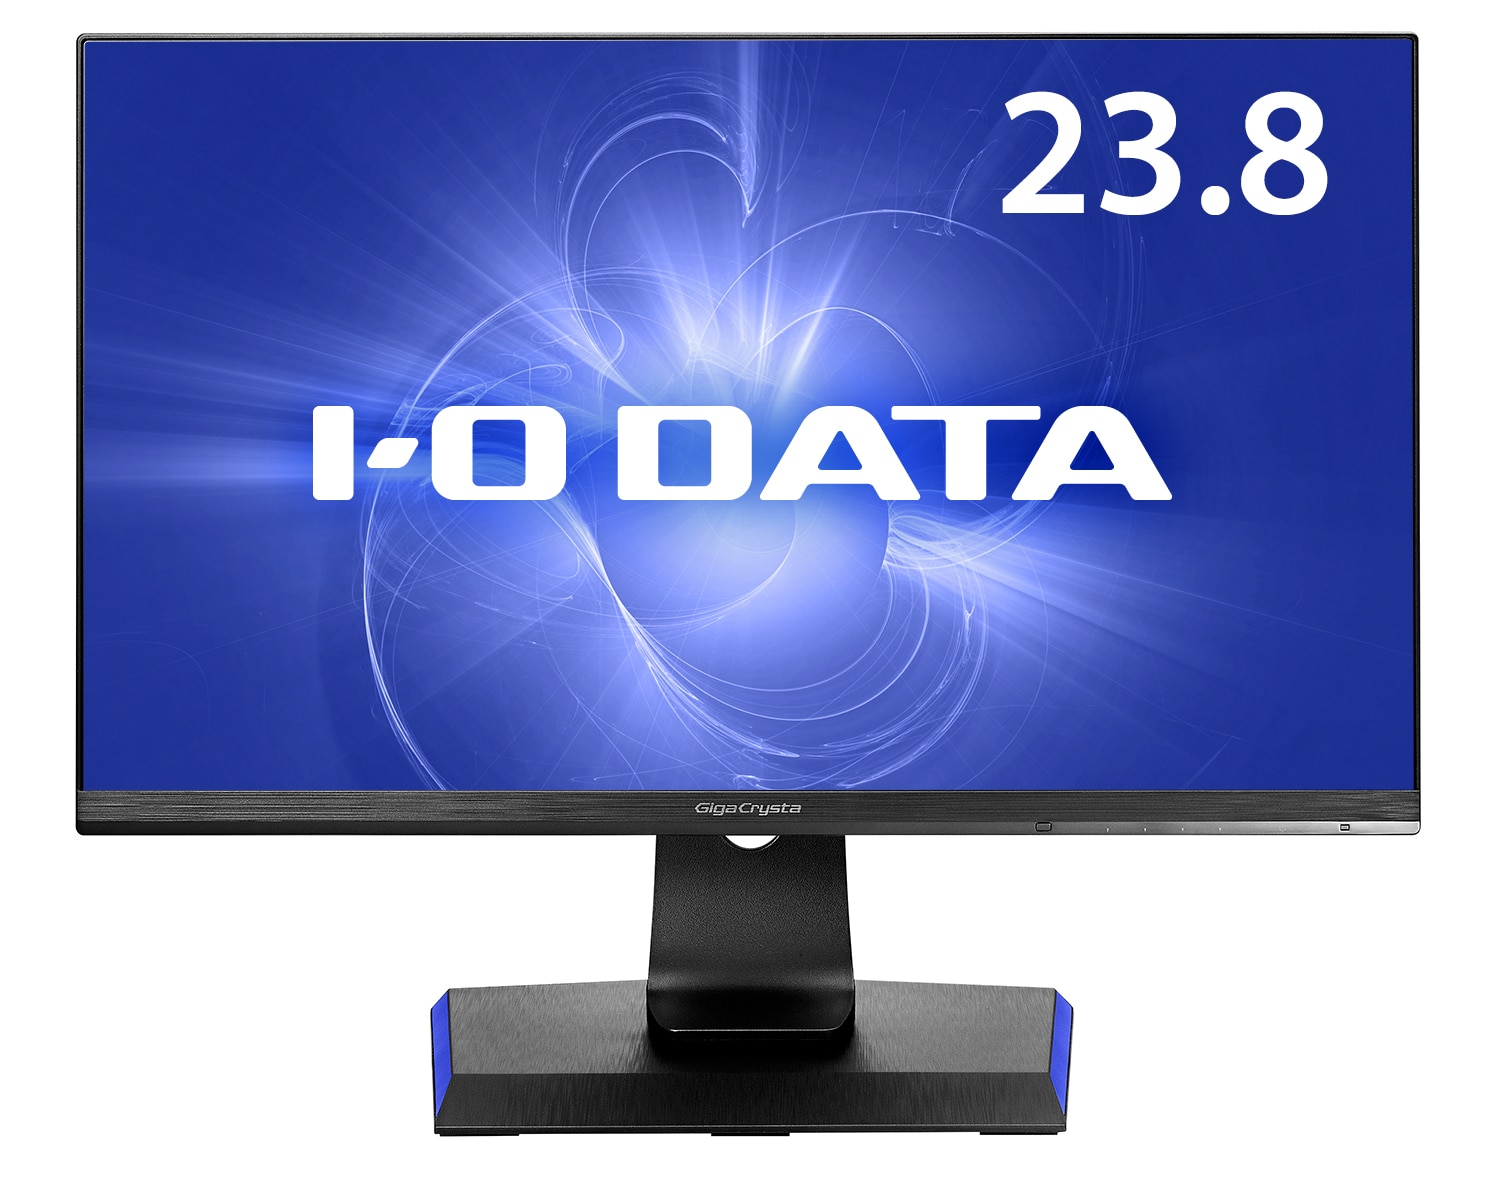 LCD-GCQ241XDB IO DATA アイ・オー・データ 広視野角ADSパネル採用 WQHD対応 23.8型 ゲーミング液晶ディスプレイ「GigaCrysta」